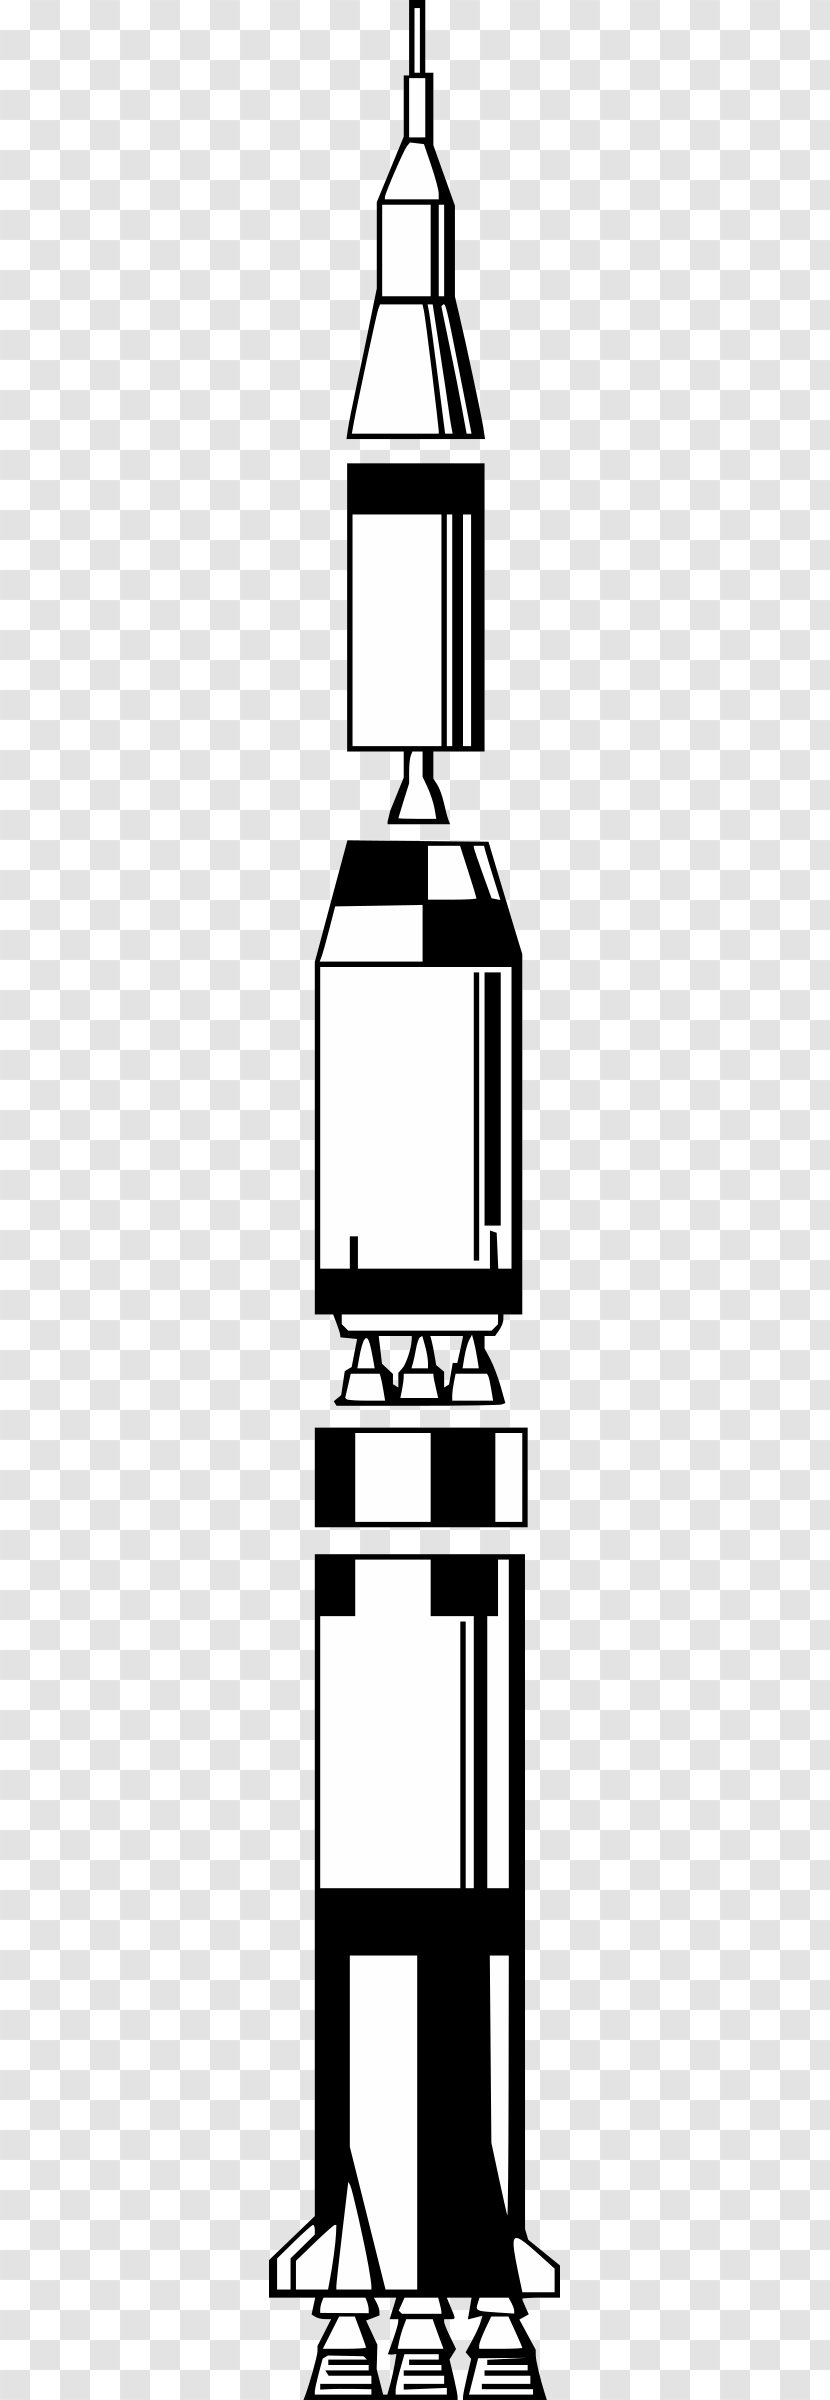 Apollo 13 Program Saturn V Rocket Transparent PNG